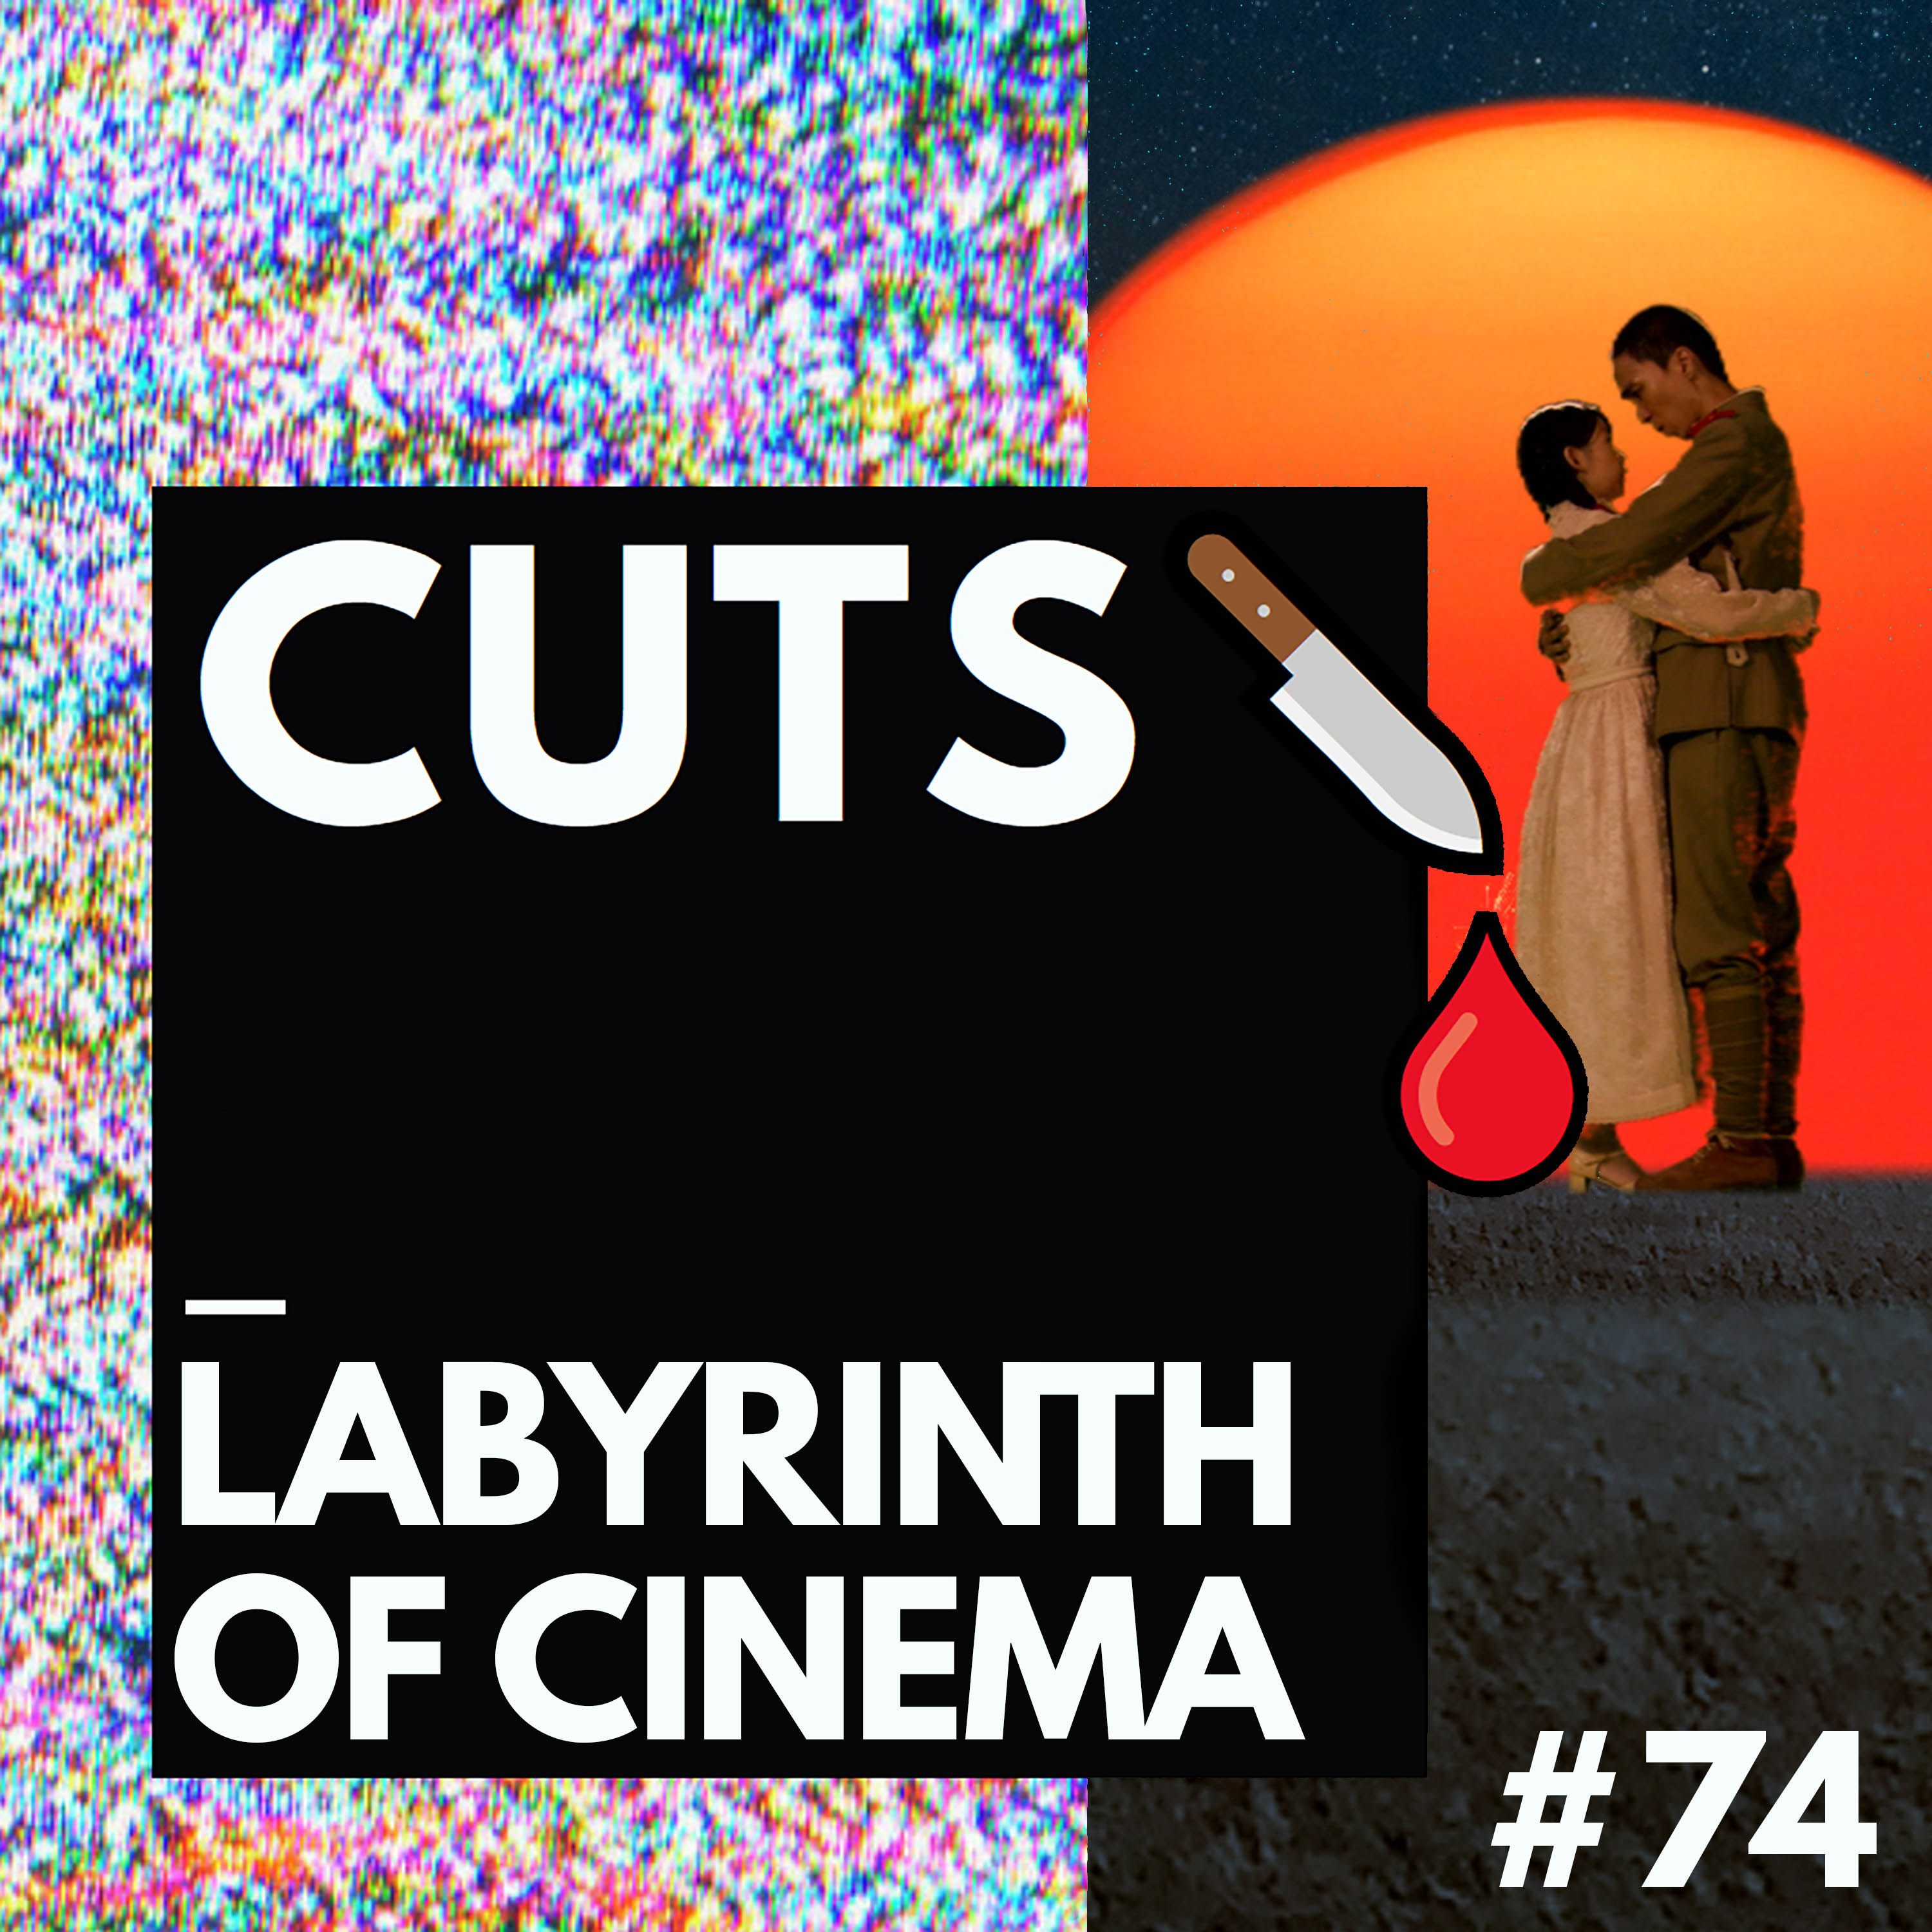 #74 Labyrinth of Cinema